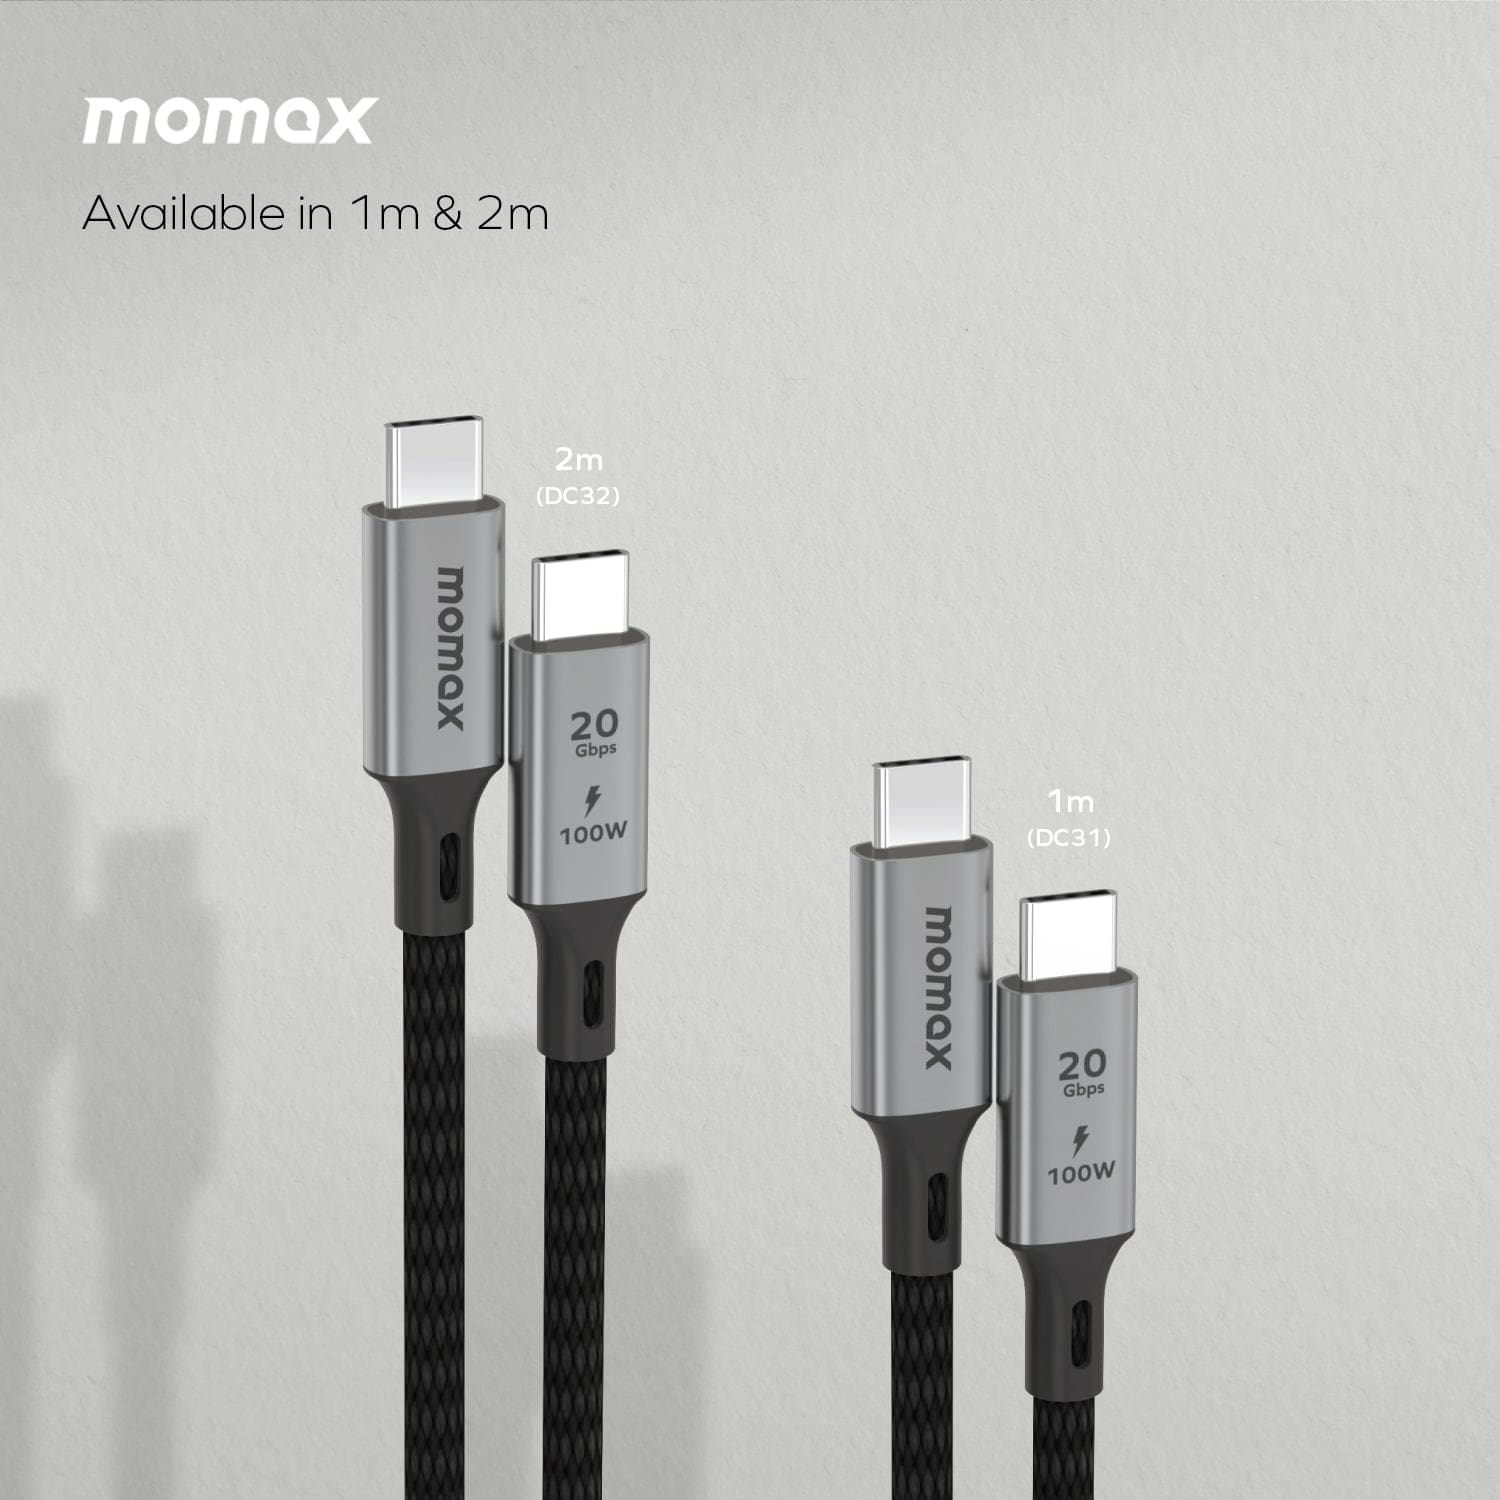 Momax Elite Dc31 11